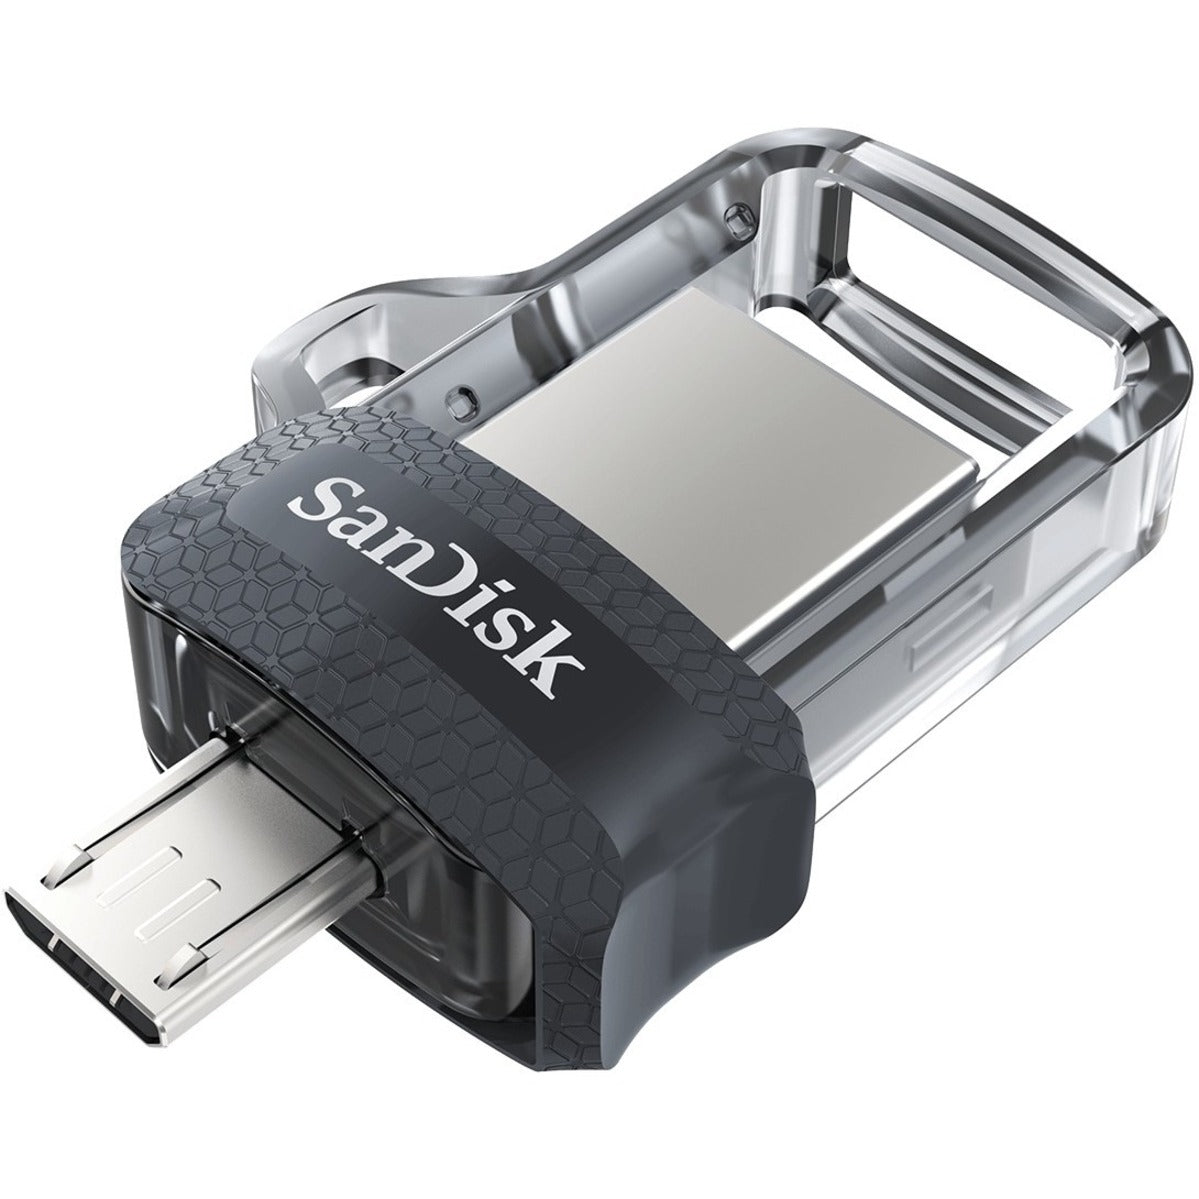 SanDisk SDDD3-064G-A46 Ultra Dual Drive m3.0 - 64GB USB 3.0 Flash Drive SanDisk - Clé USB Flash Drive Ultra Dual m3.0 - 64 Go USB 3.0